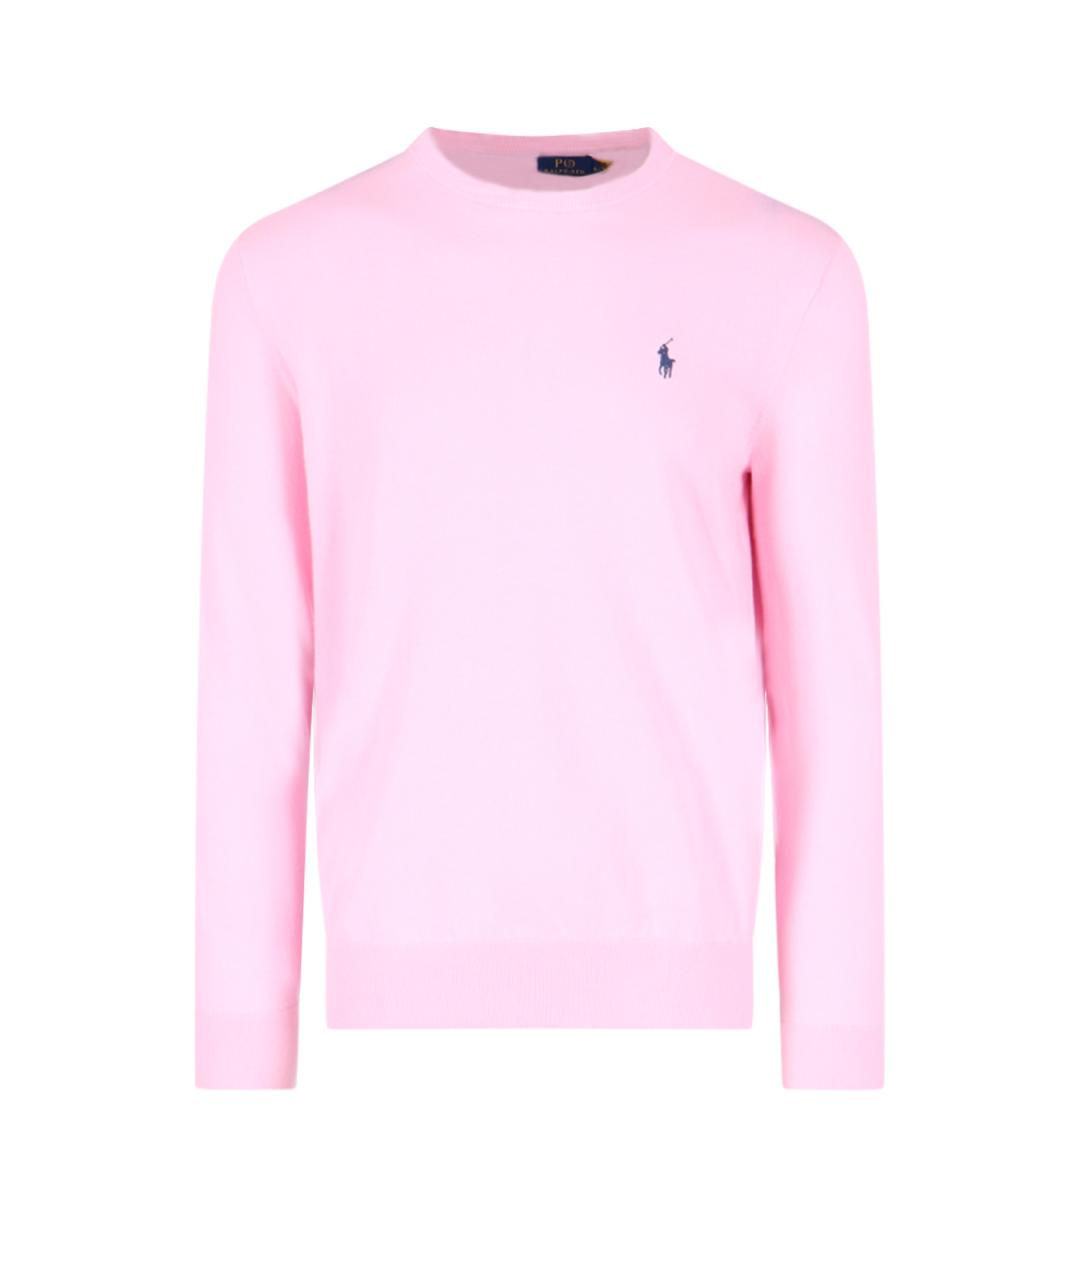 POLO RALPH LAUREN Розовый джемпер / свитер, фото 1